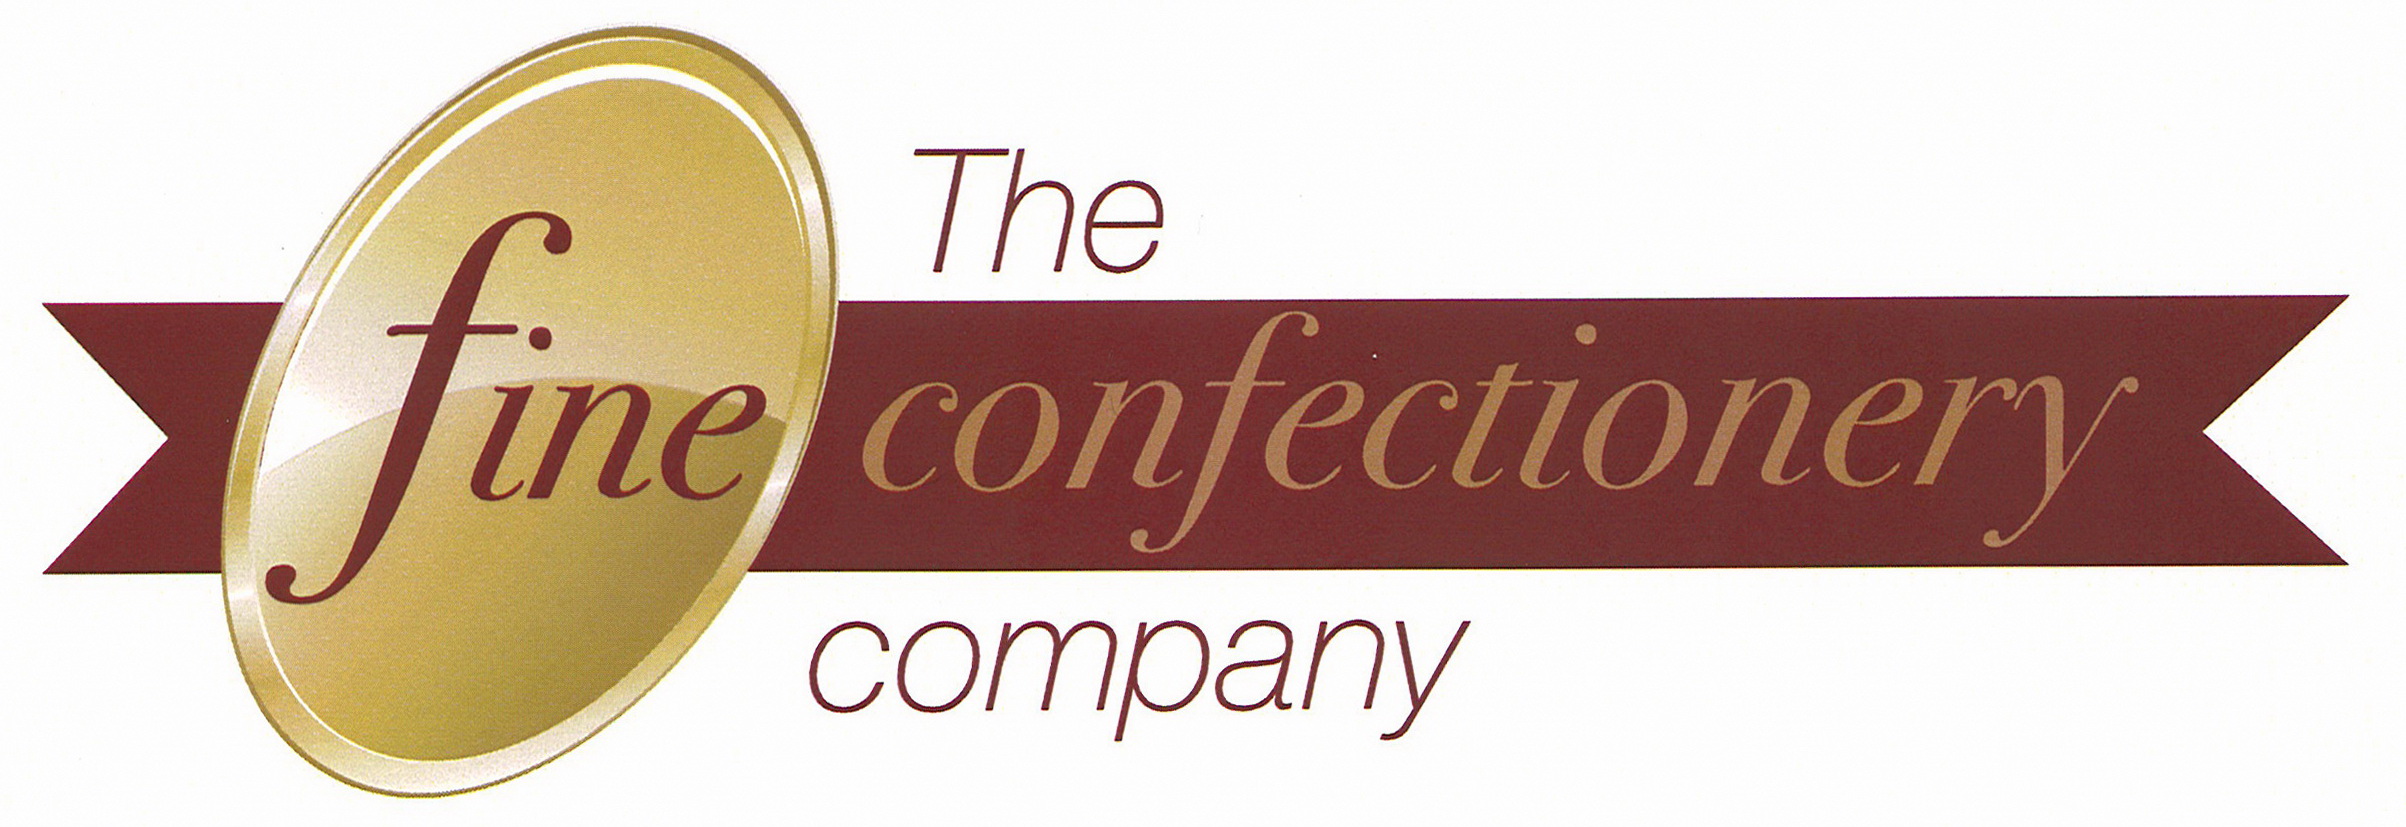 The Fine Confectionery Company